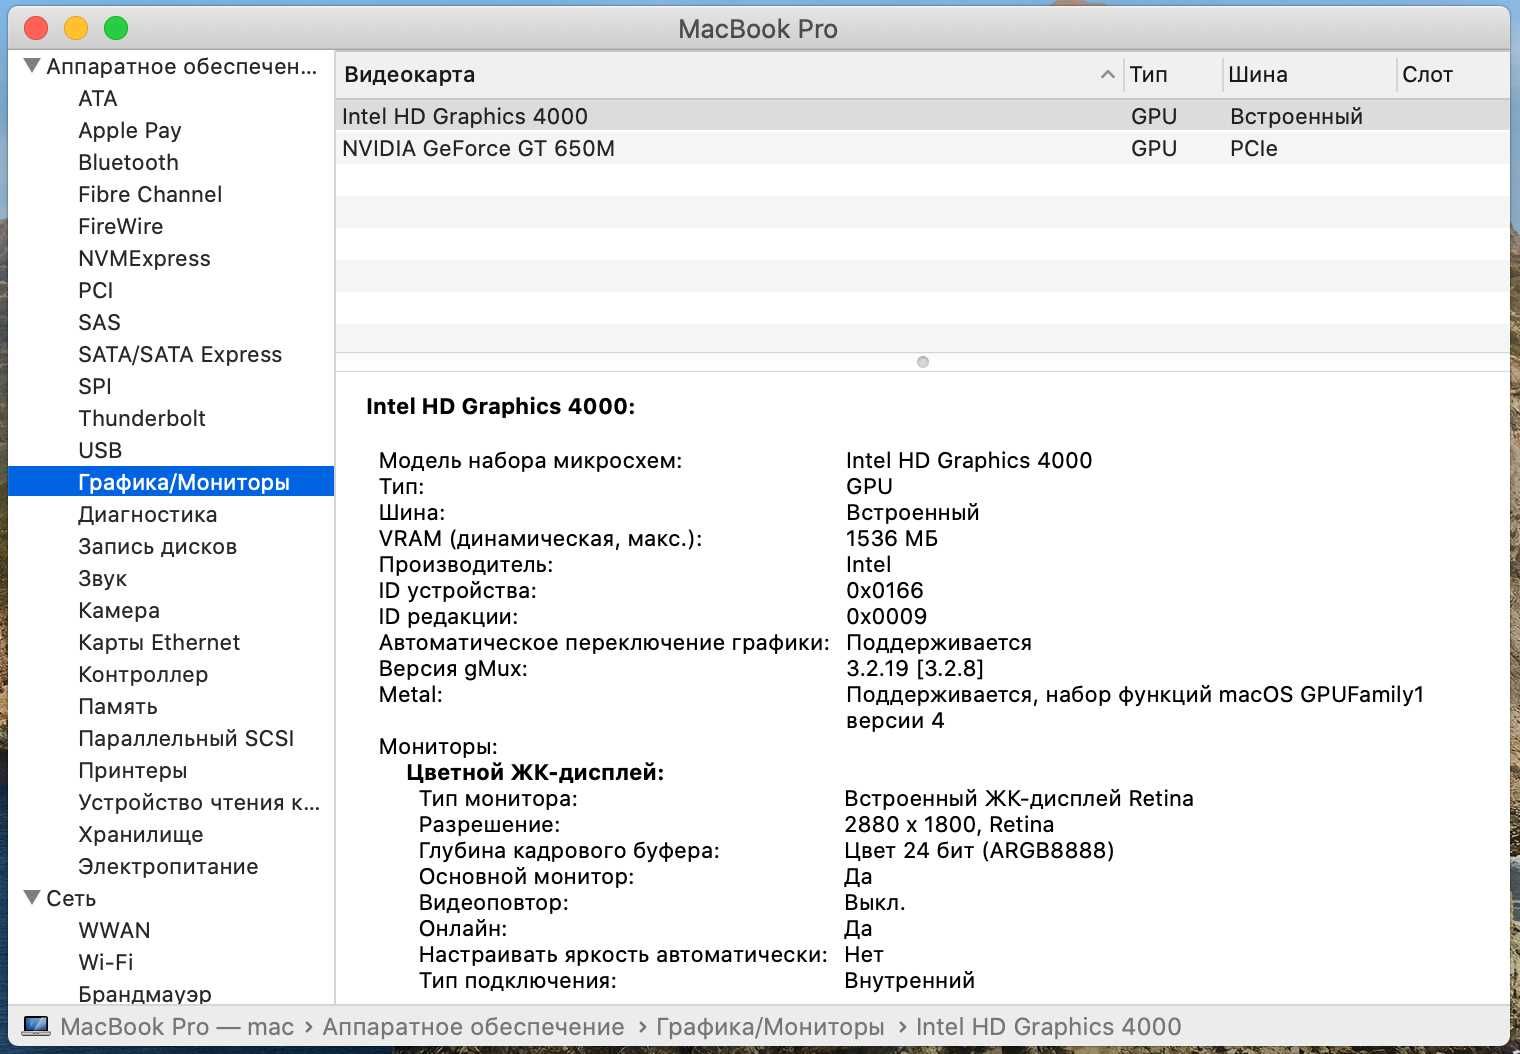 Macbook Pro 15` (Retina, Early 2013), i7, 16 Gb RAM, 512Gb SSD!